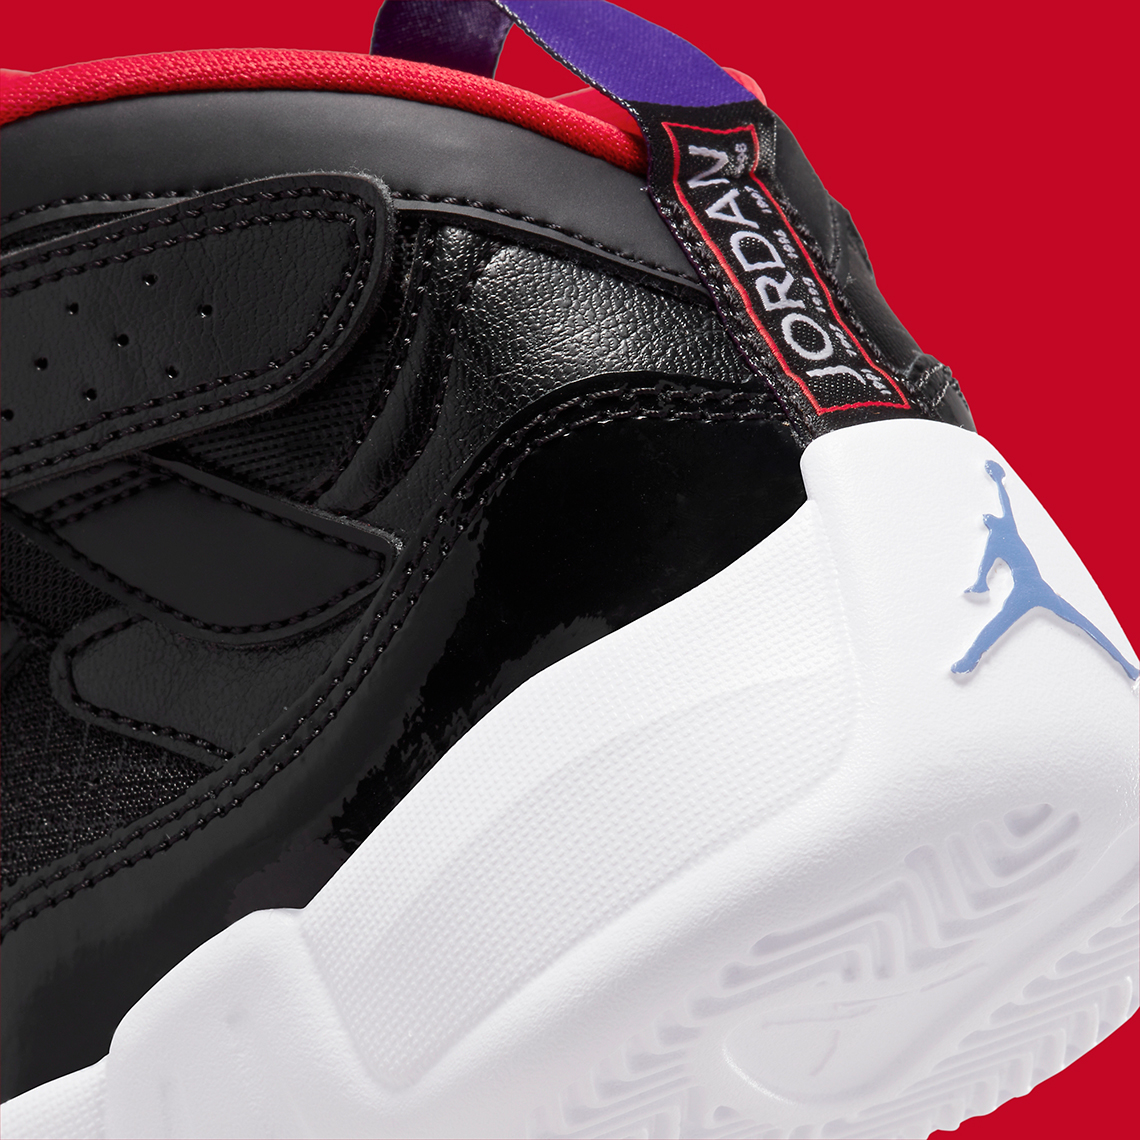 Jordan Concord Hybrid Shoe 2022 Release Info | SneakerNews.com